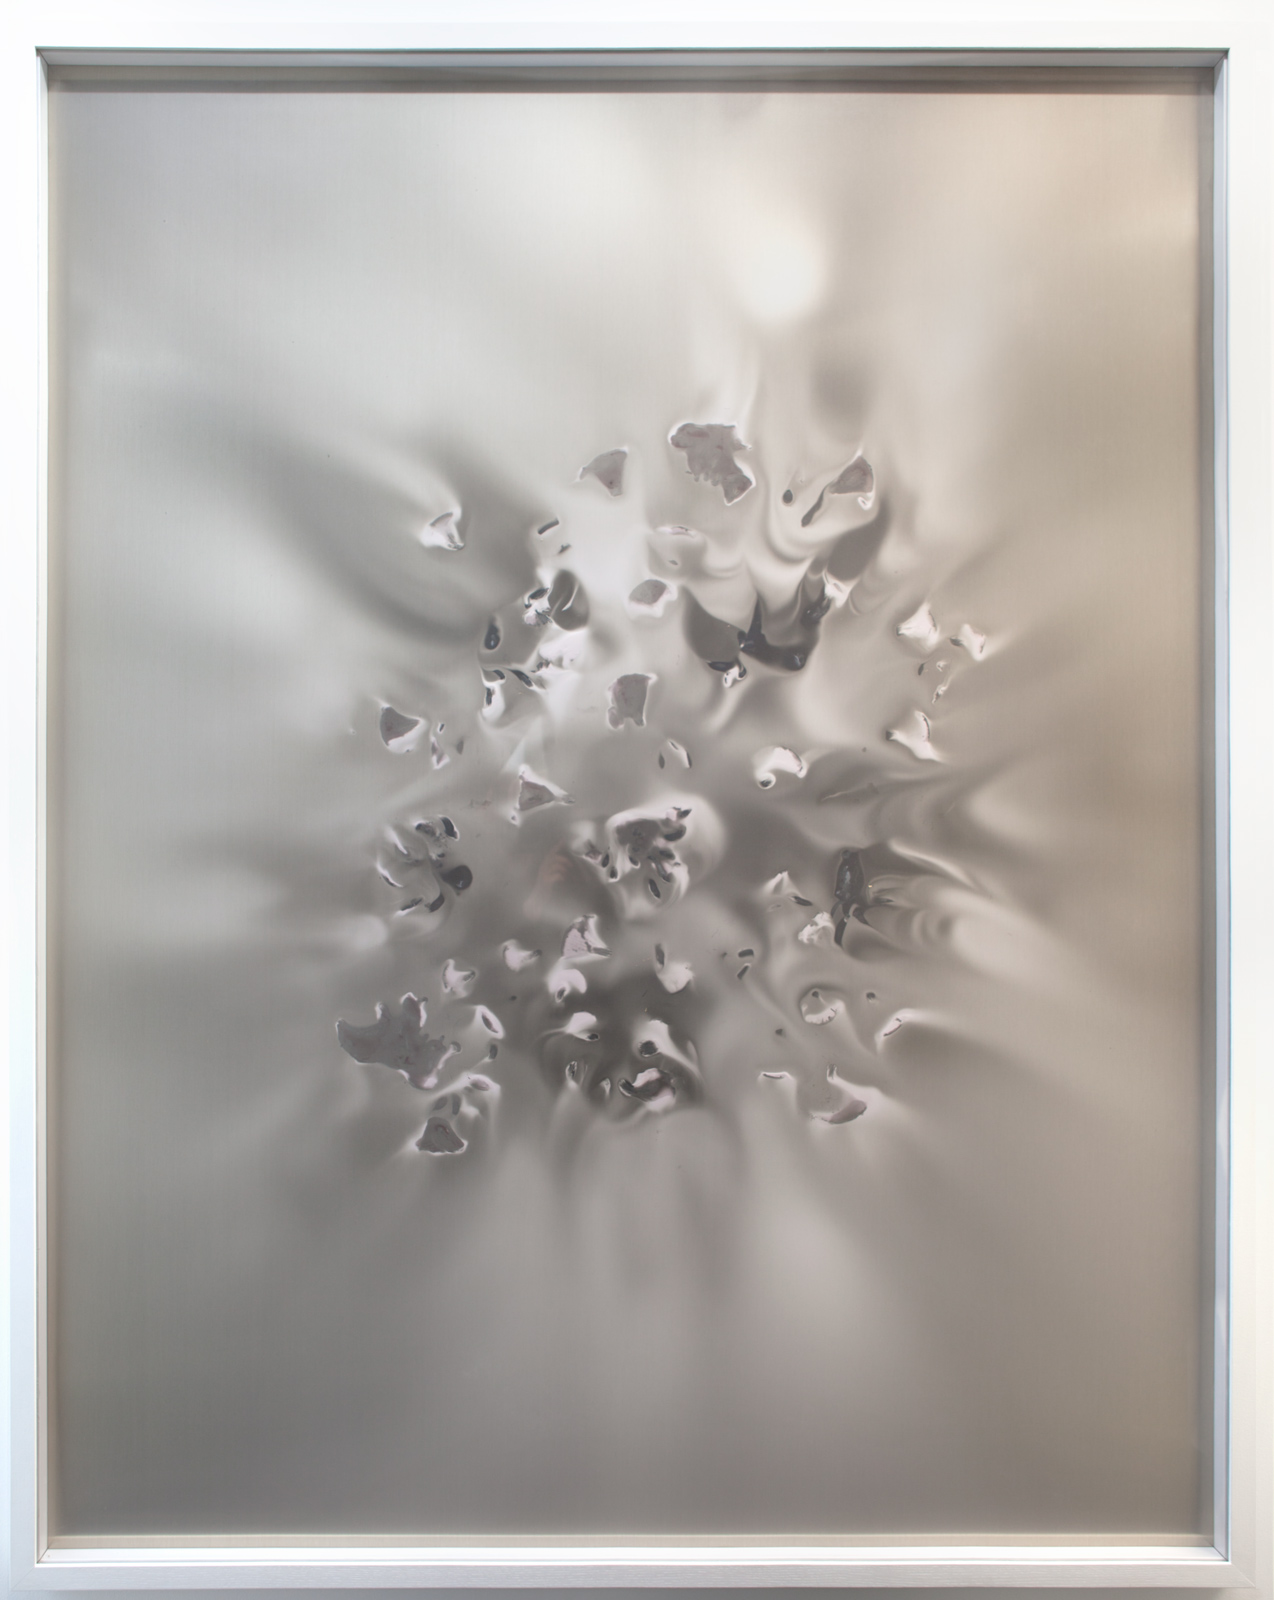 Tamoshitake 2, sporées sur aluminium, 140 x 175 cm, 2016, Collection privée